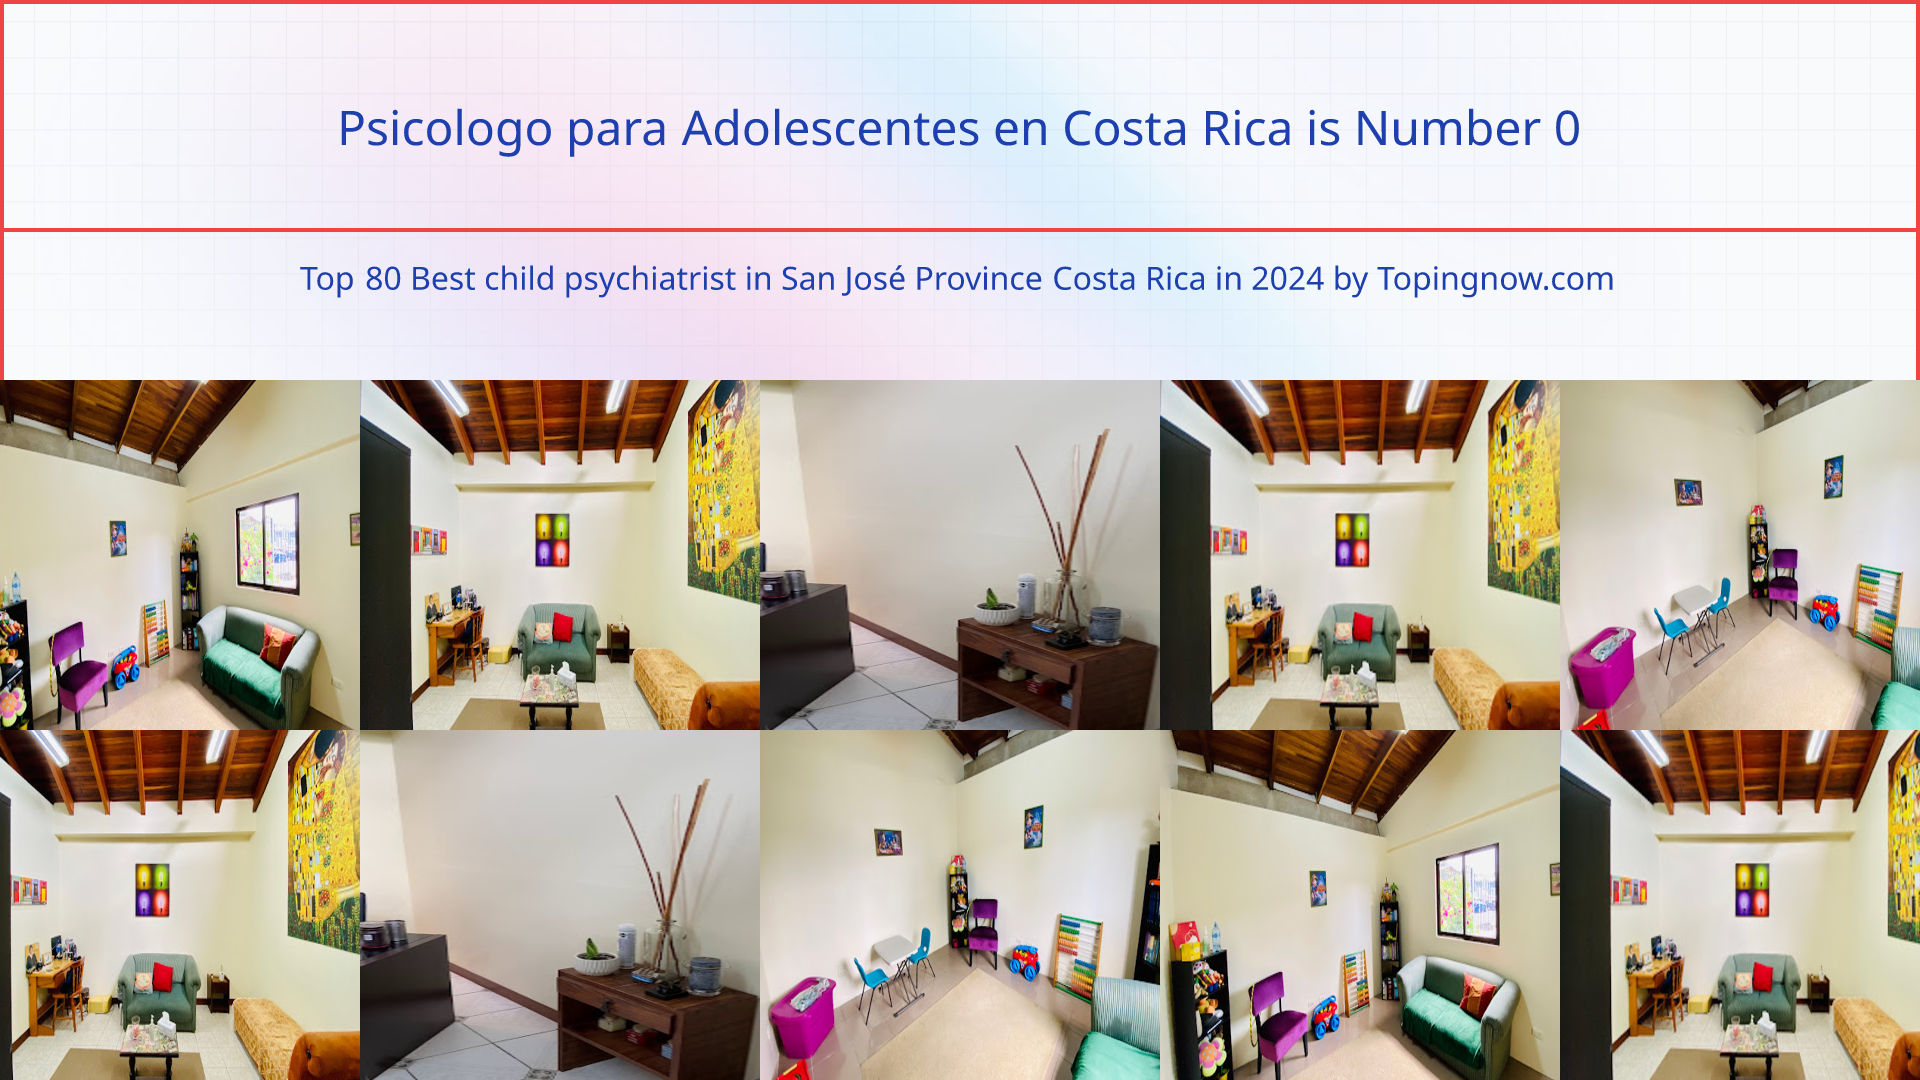 Psicologo para Adolescentes en Costa Rica: Top 80 Best child psychiatrist in San José Province Costa Rica in 2024